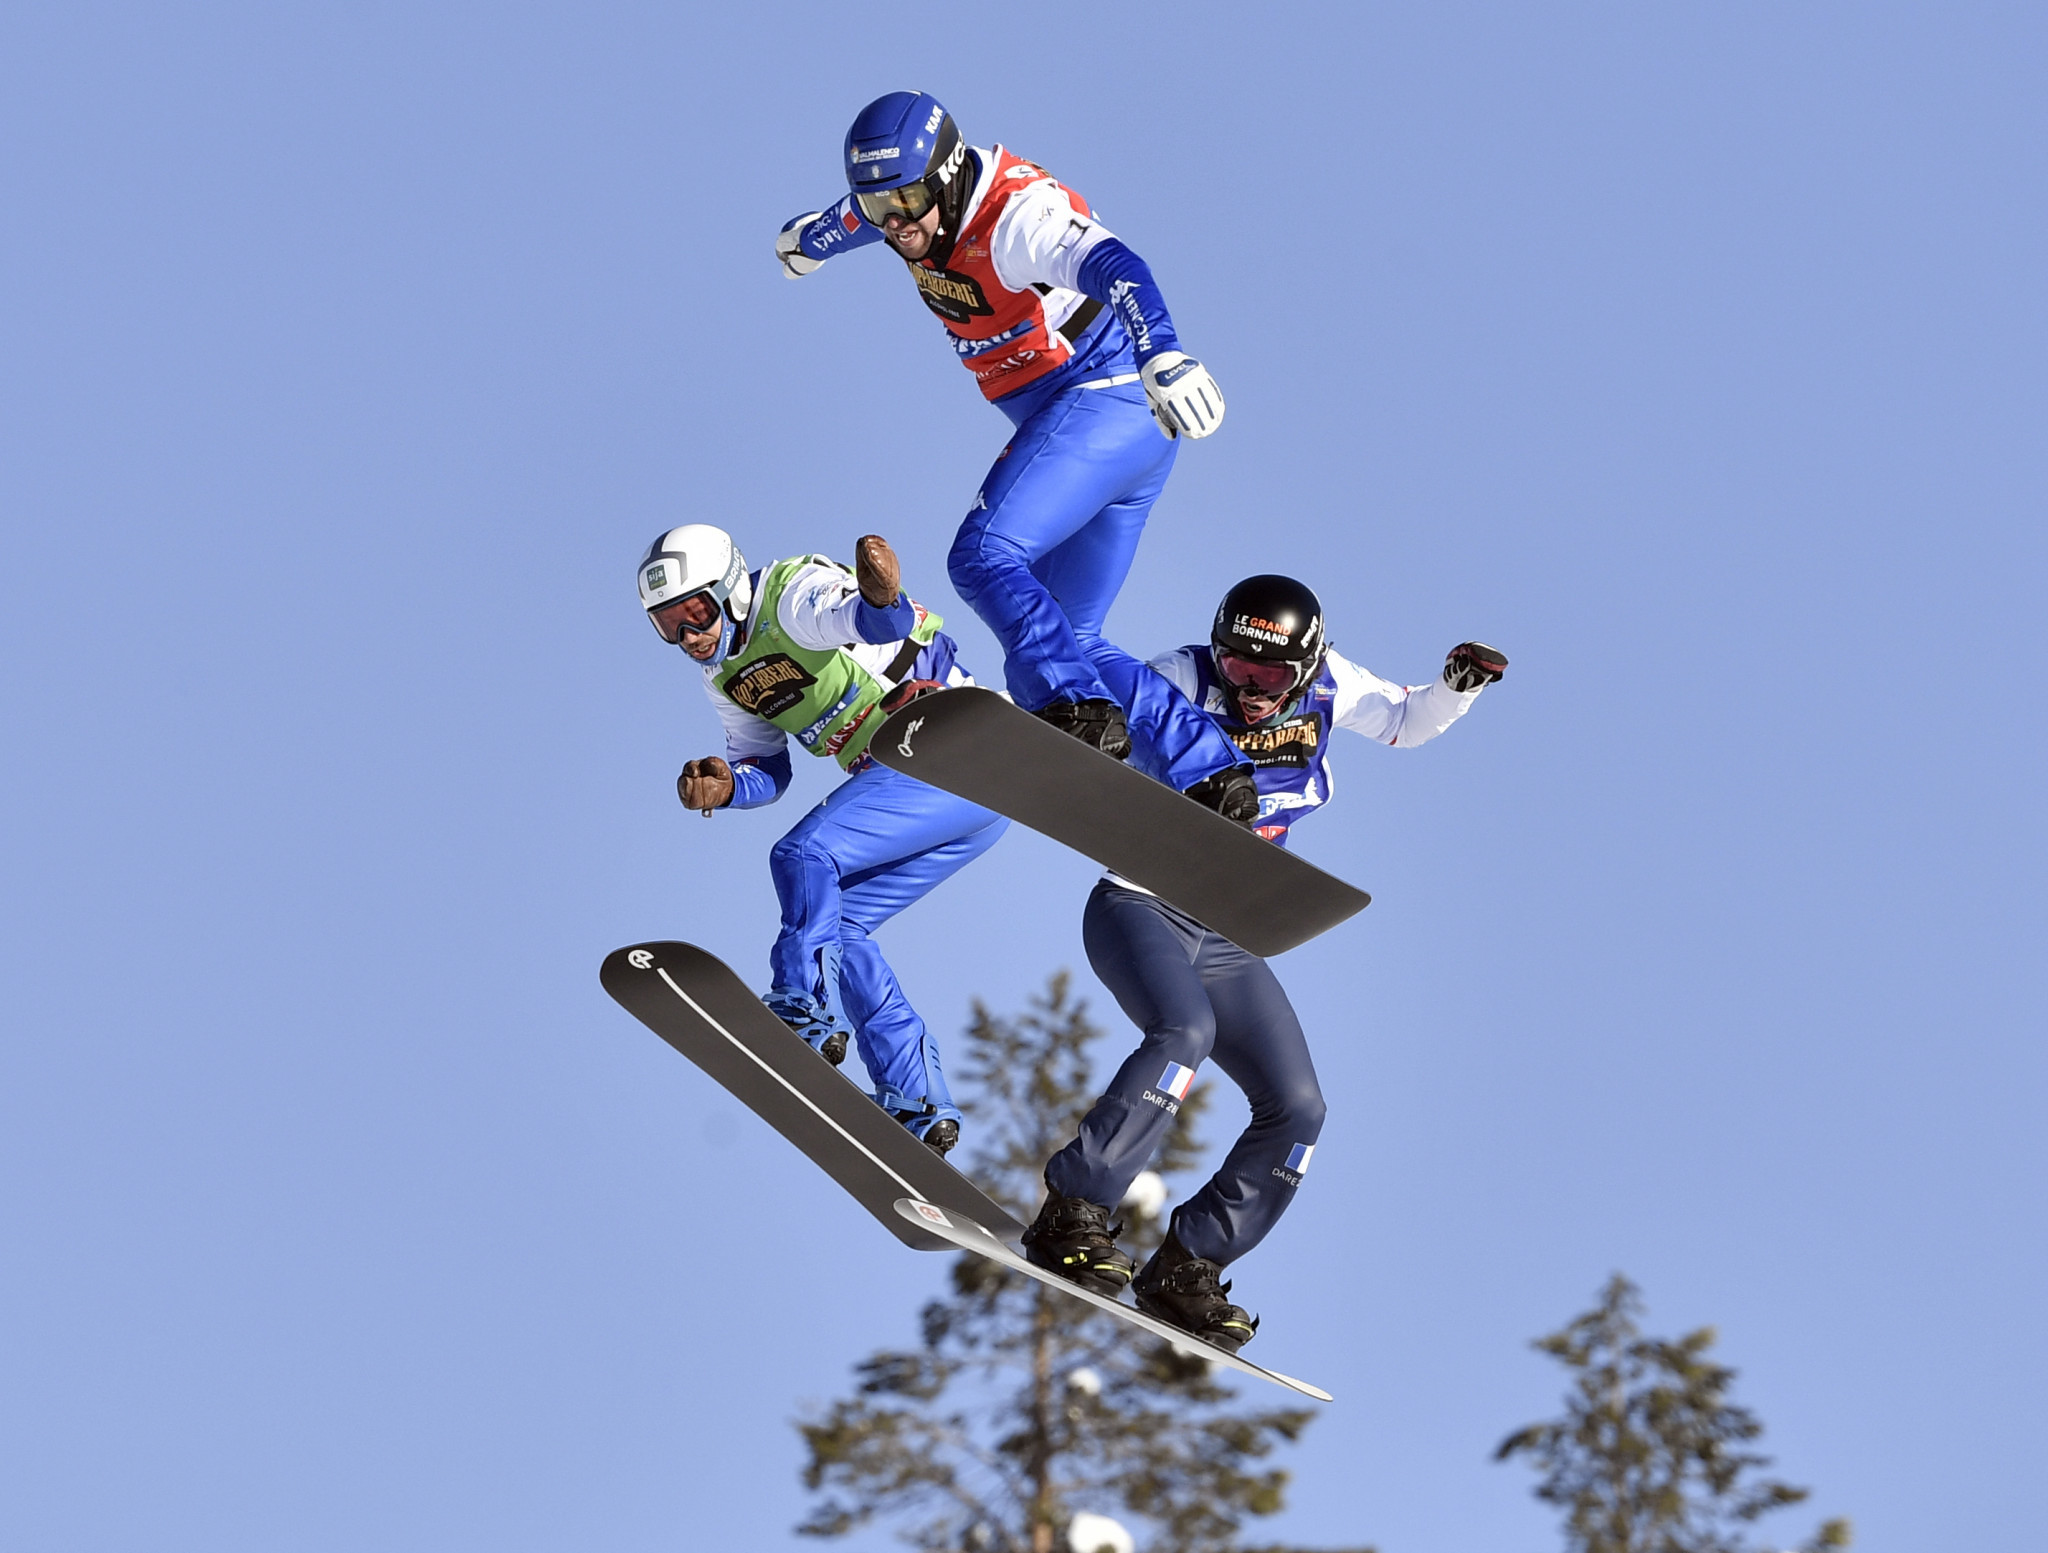 Bakuriani set for Snowboard Cross World Cup doubleheader